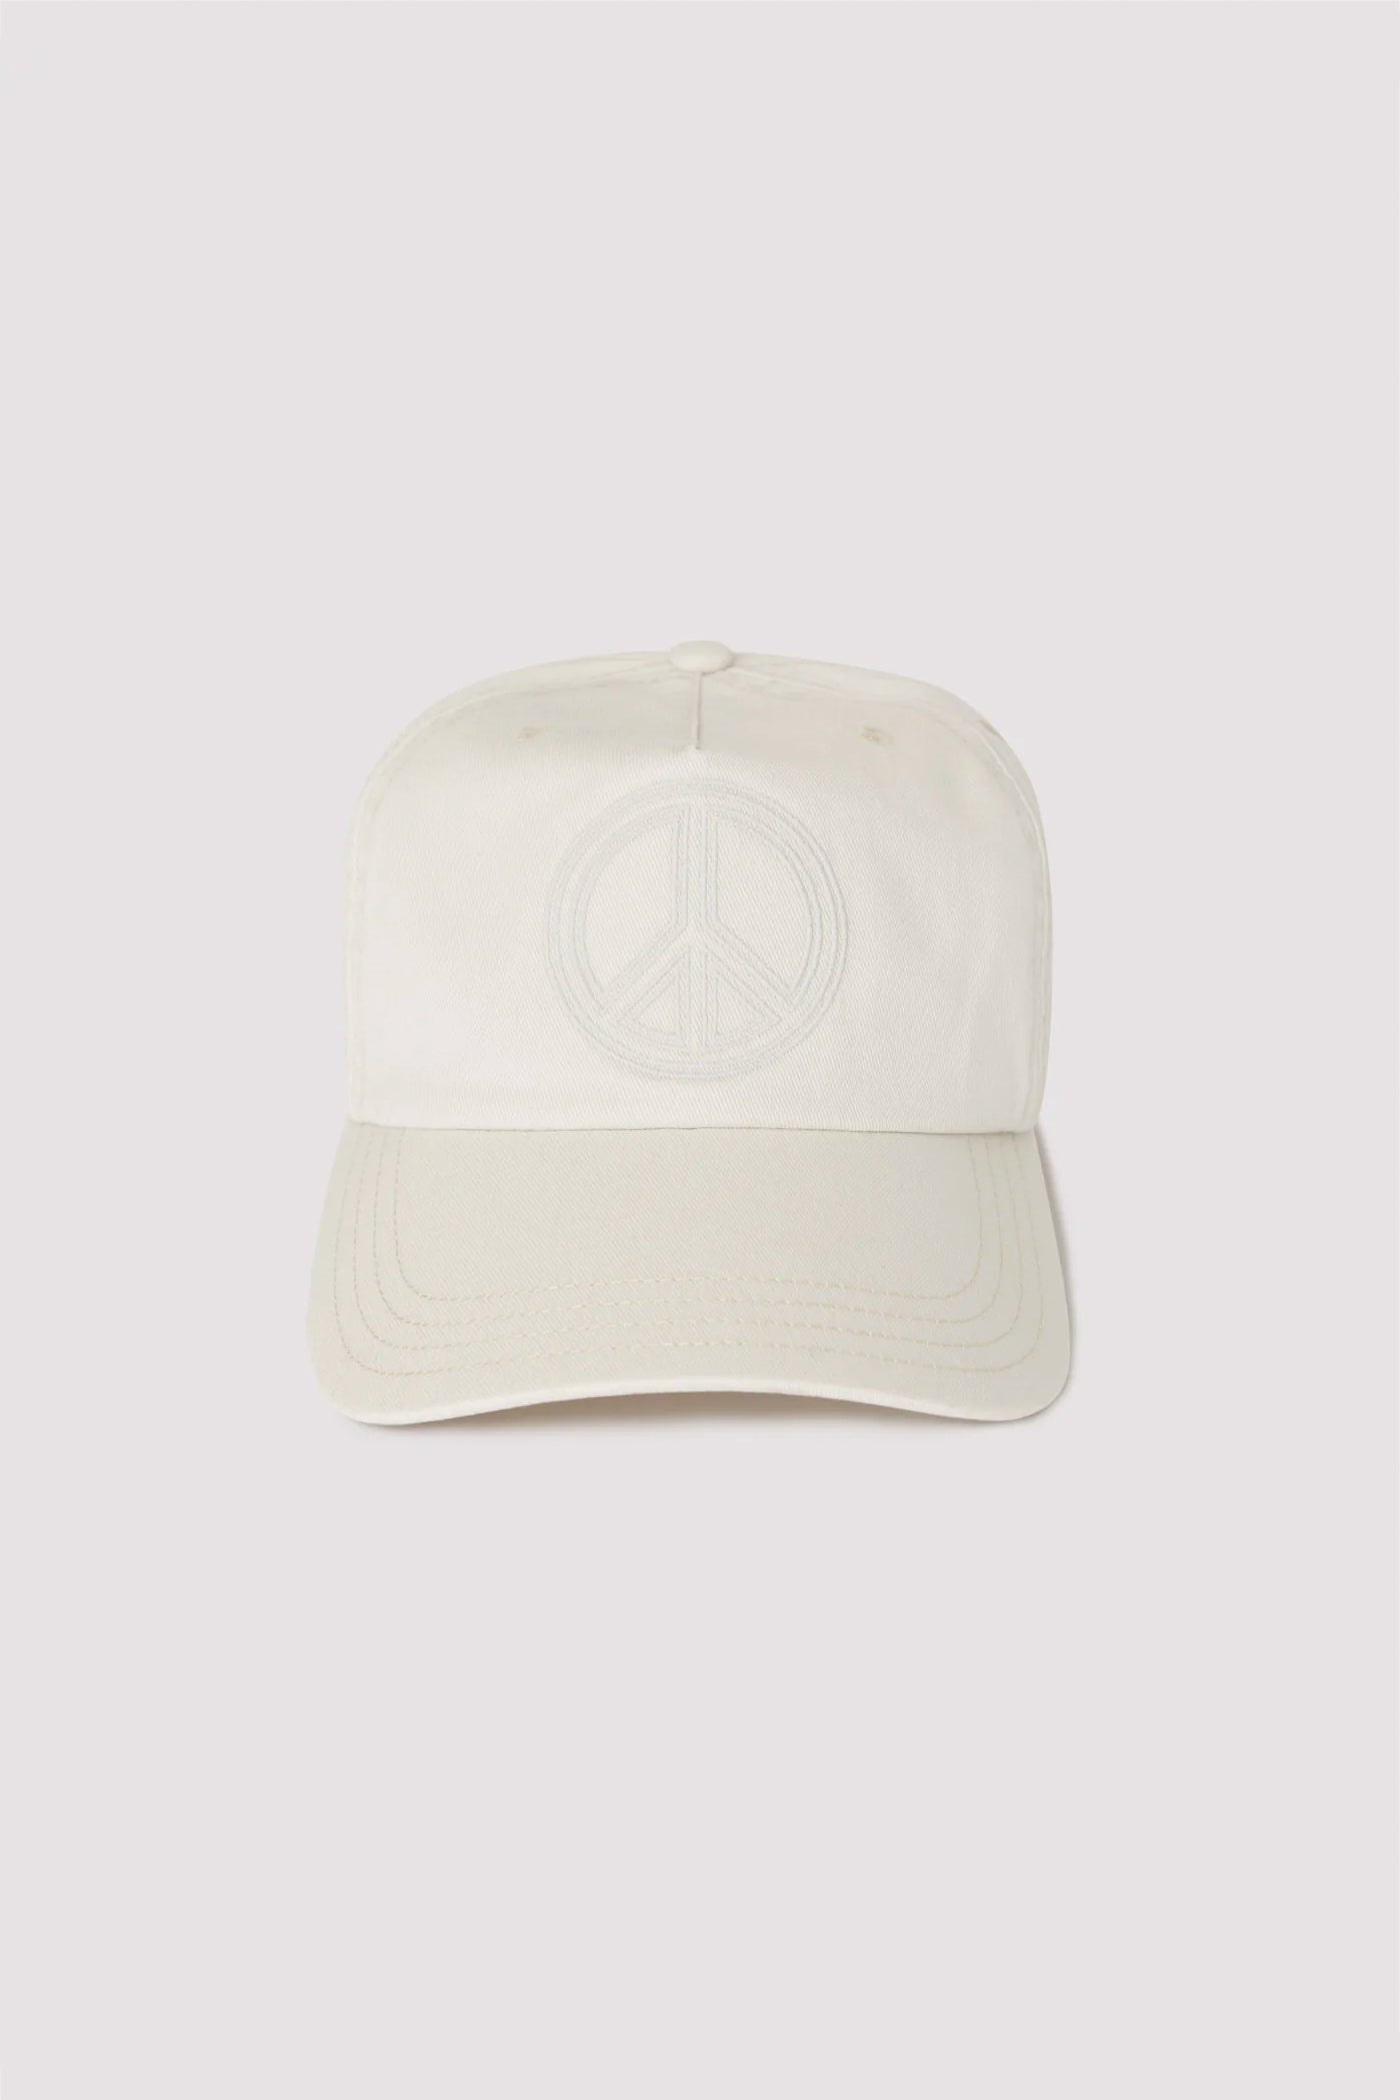 Spiritual Gangster Peace Canvas Hat